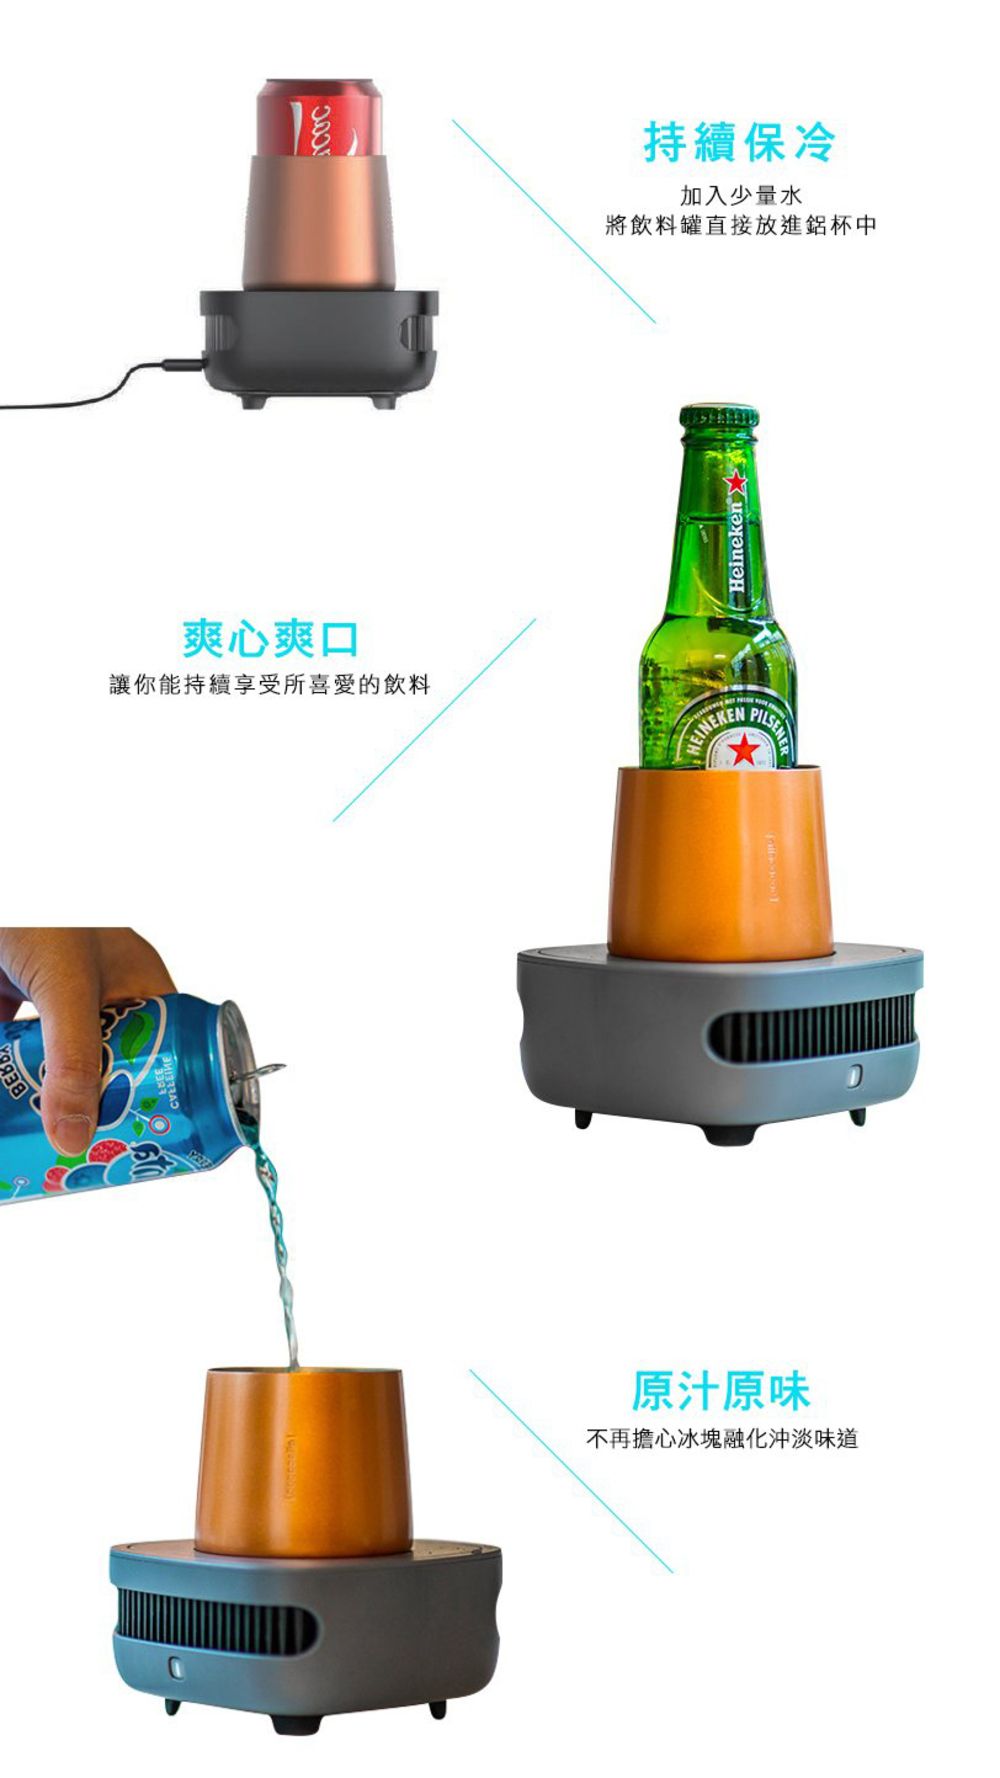 Cupcooler instant 飲品冷凍器